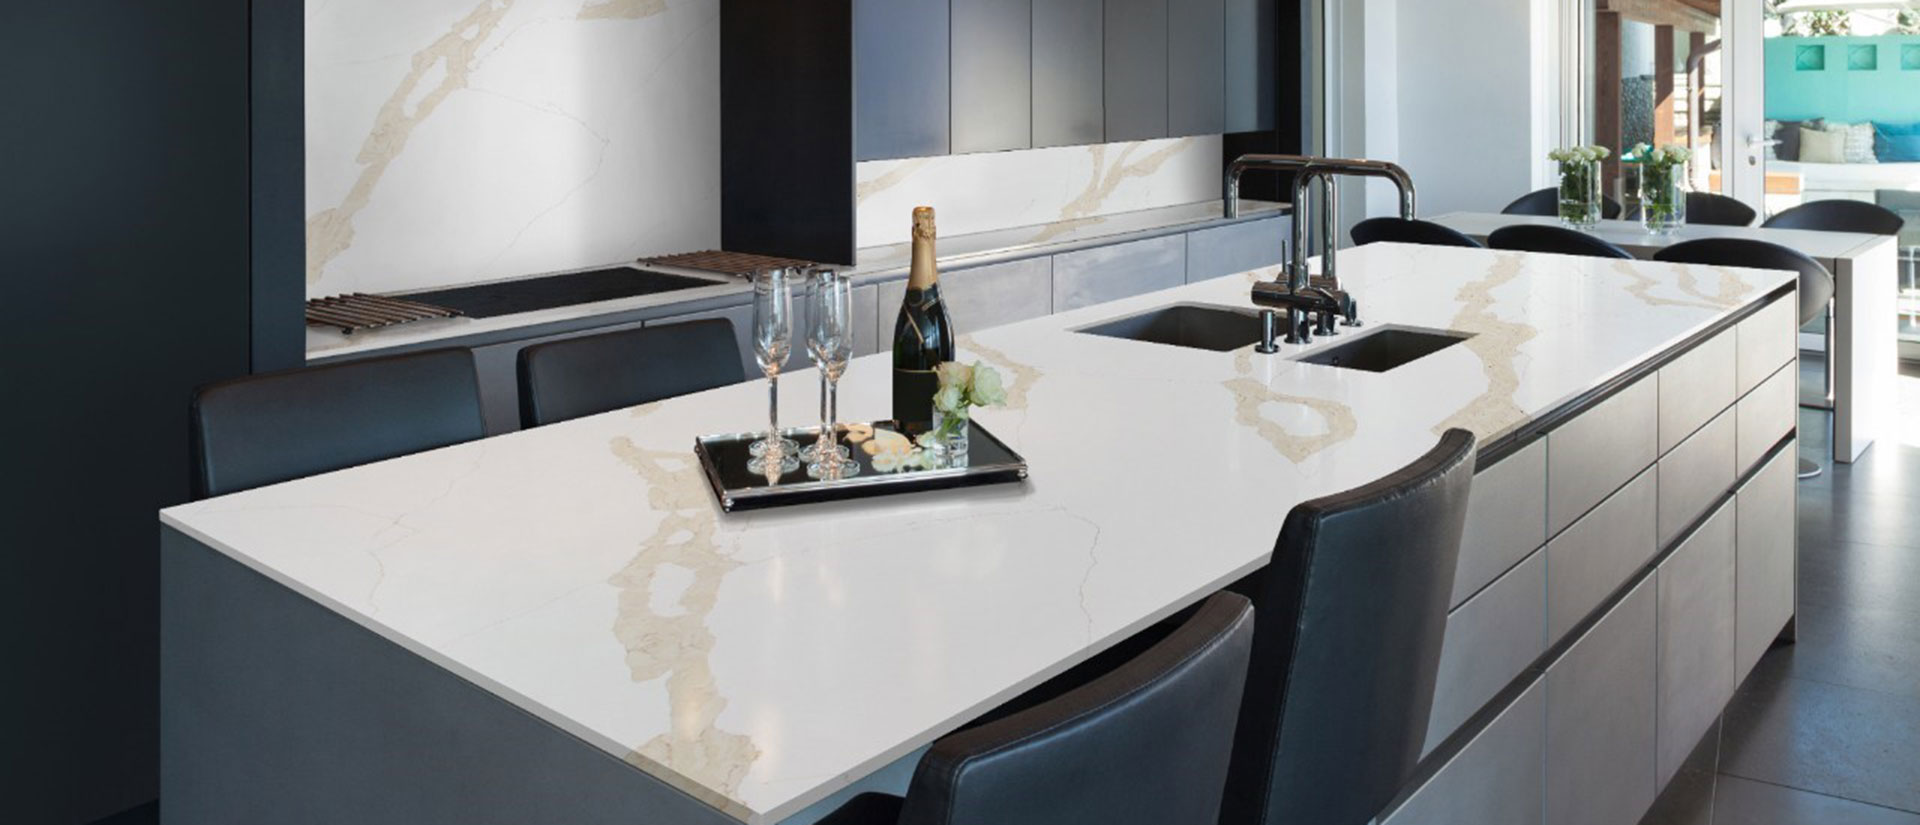 Calacatta Leon Gold quartz countertop in a luxurious kitchen with marble backsplash